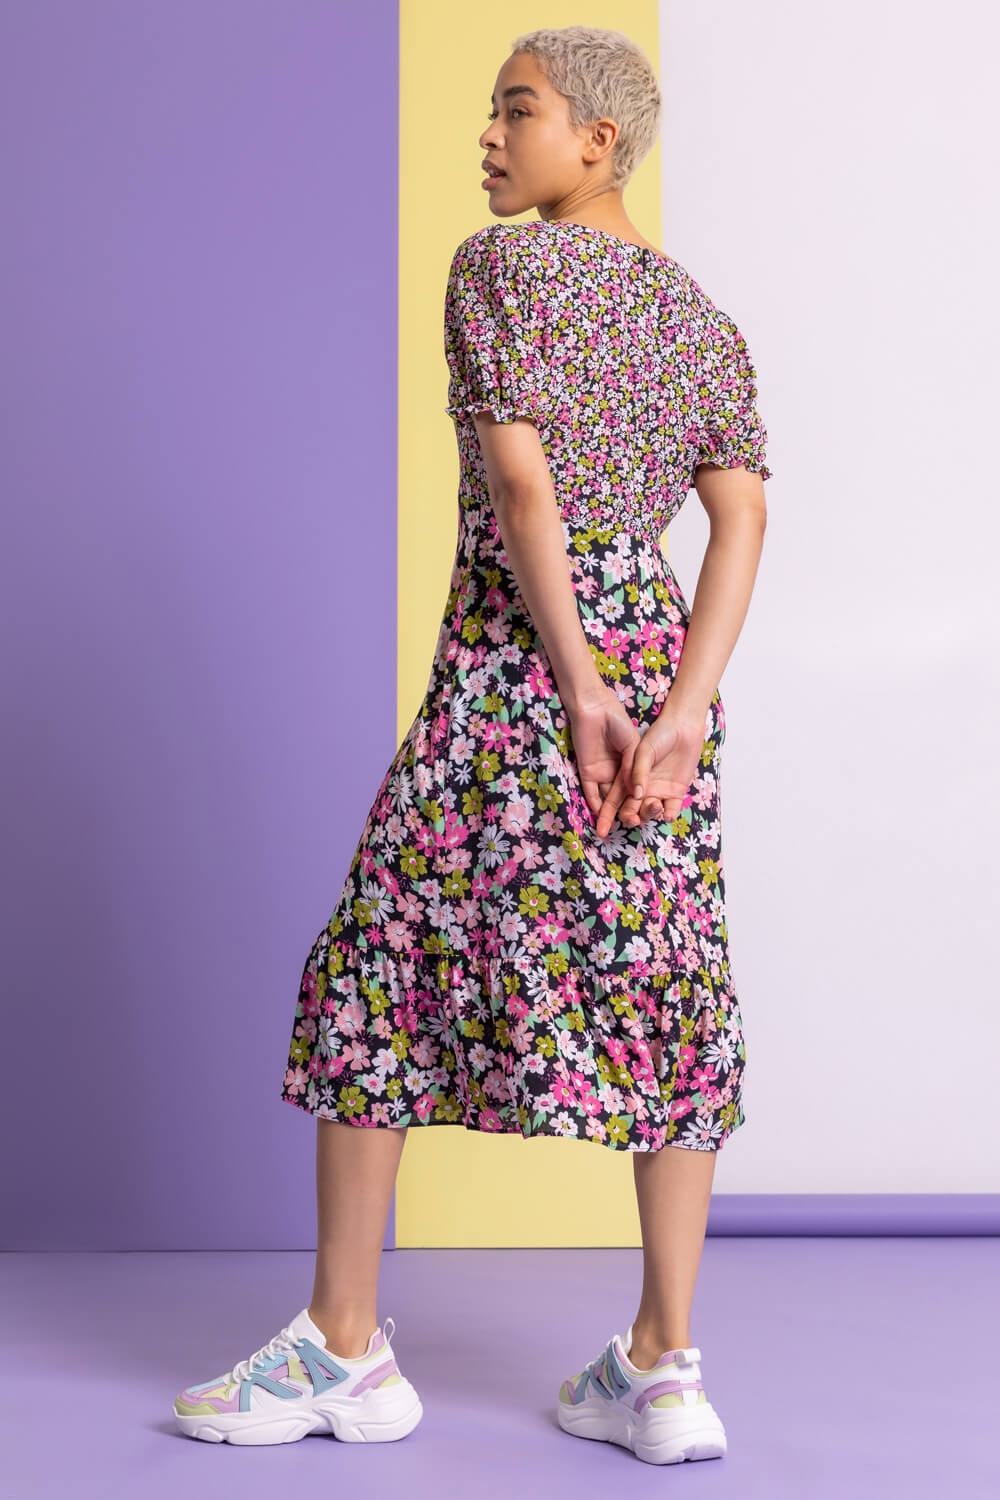 PINK Contrast Floral Print Tea Dress, Image 2 of 5